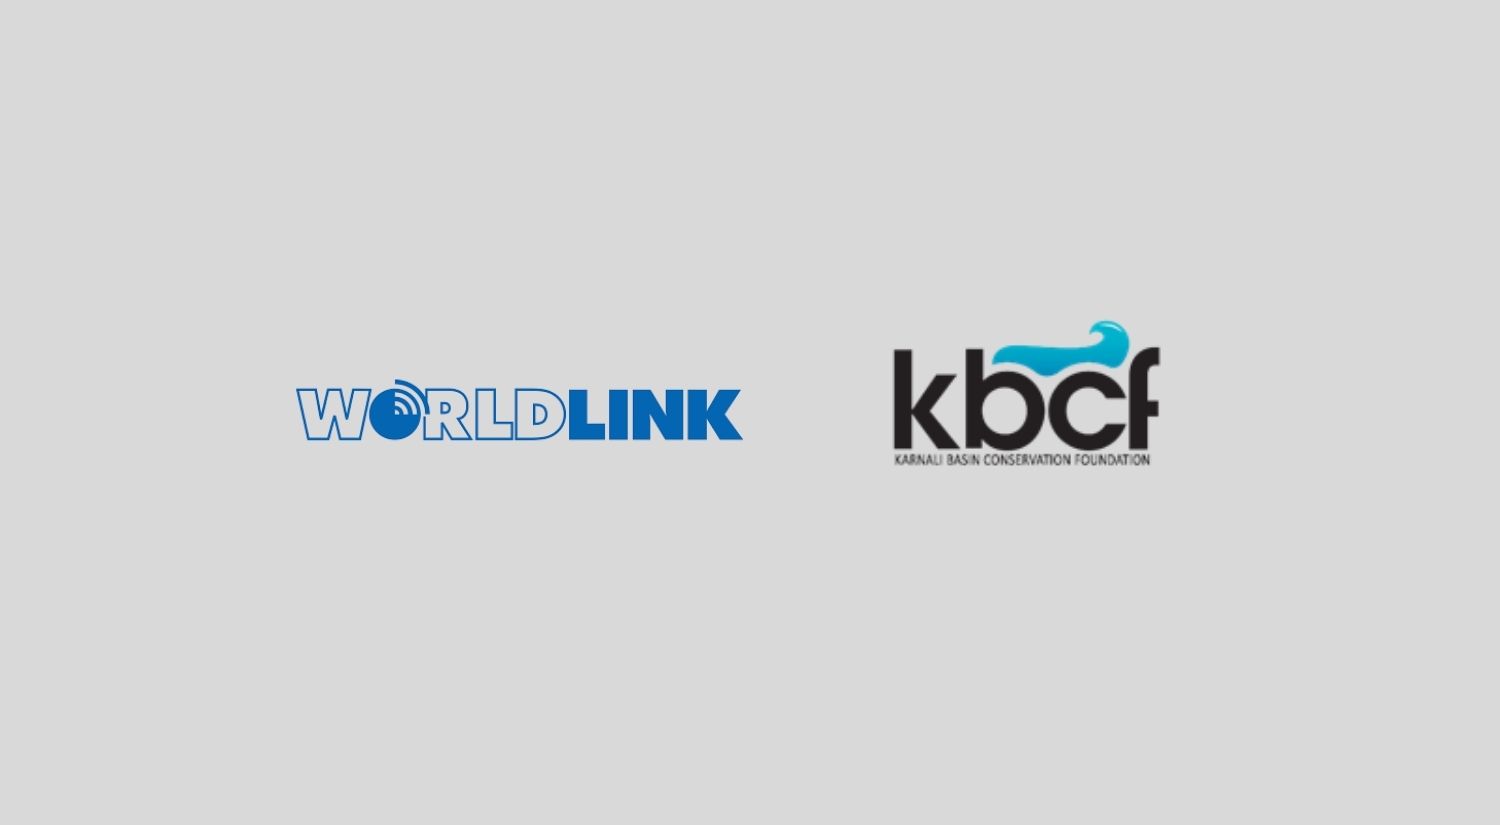 Worldlink kbcf digital karnali